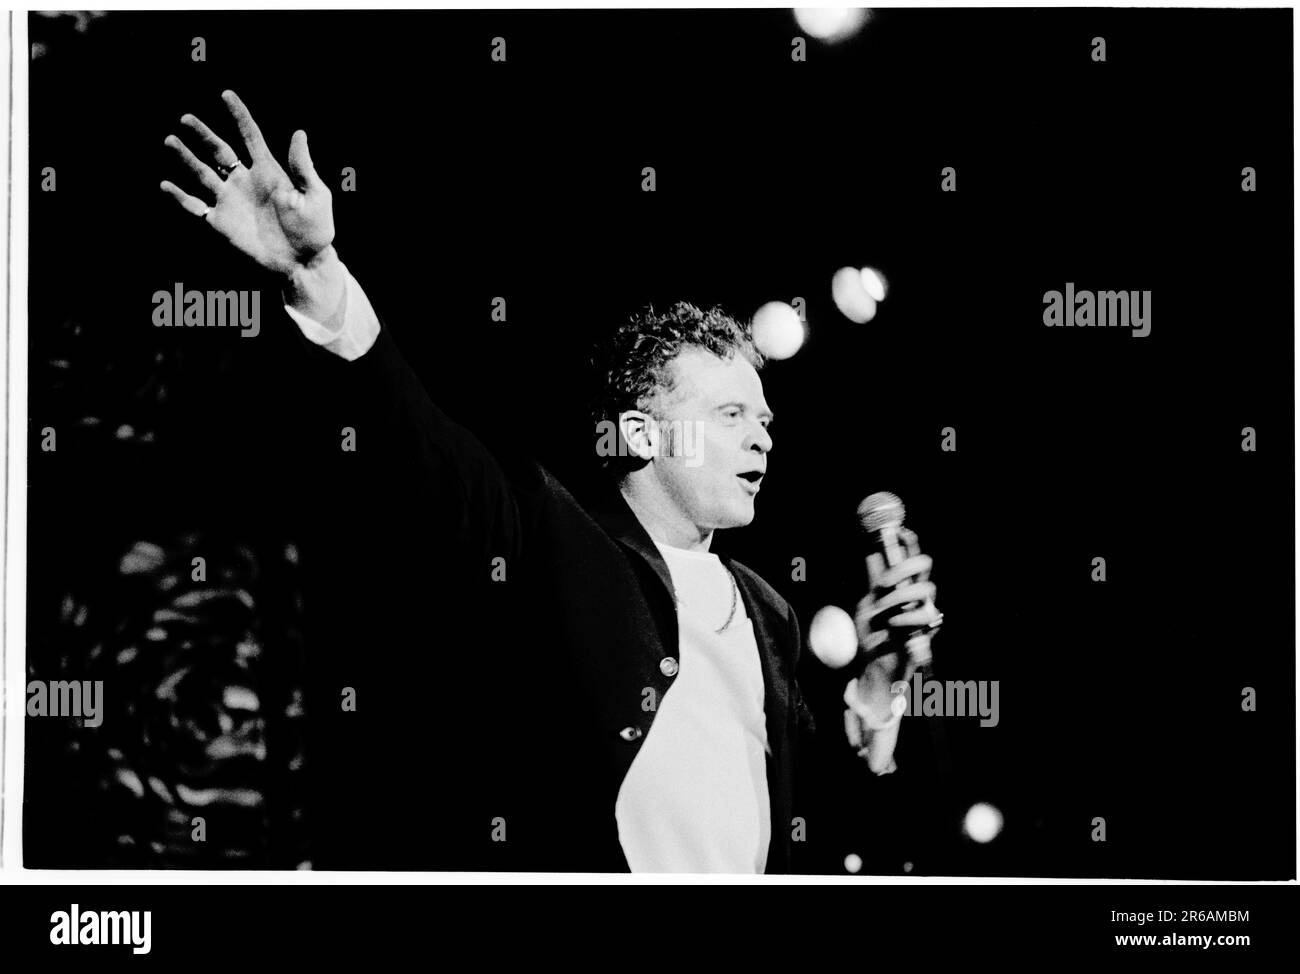 Mick Hucknall von Simply Red spielt am 24. April 2000 live auf der Cardiff International Arena CIA in Cardiff. Foto: Rob Watkins Stockfoto